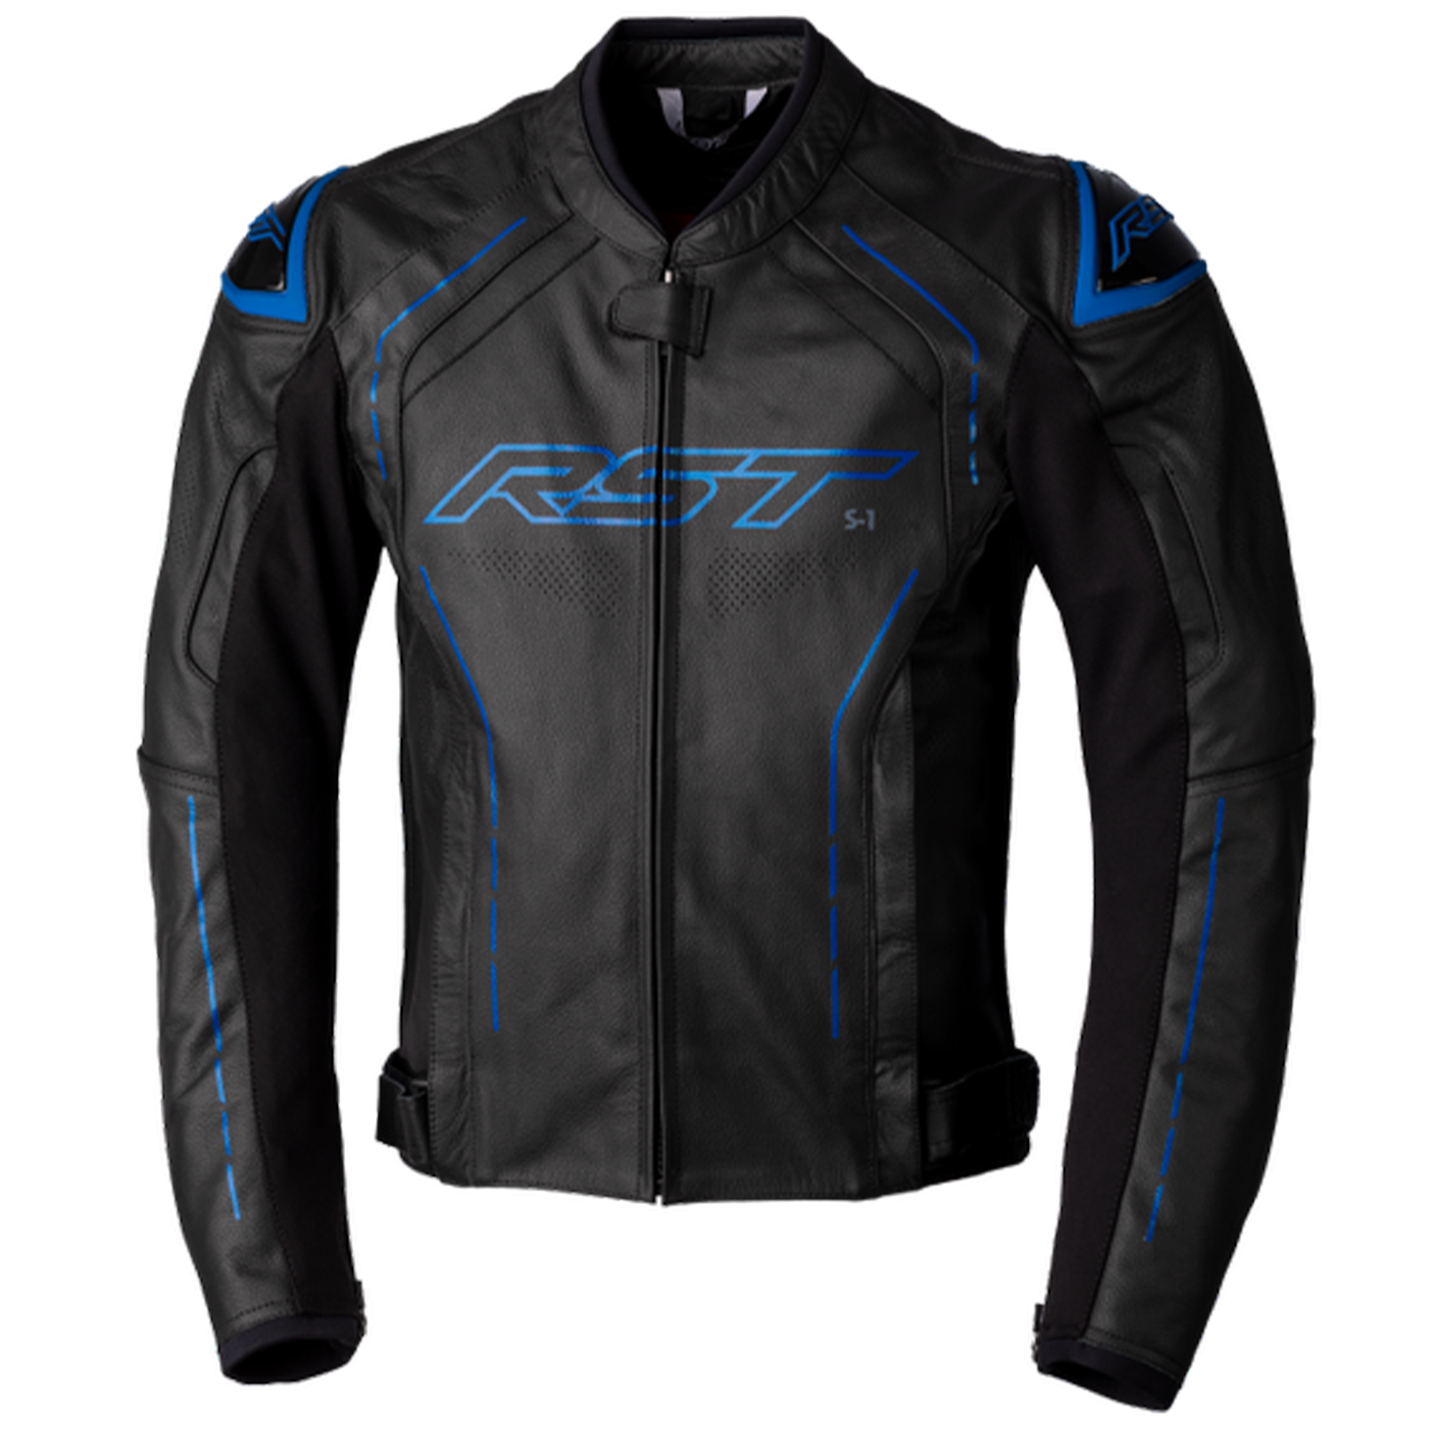 RST S1 (CE) Men's Leather Jacket - Black/Grey/Neon Blue (2977)